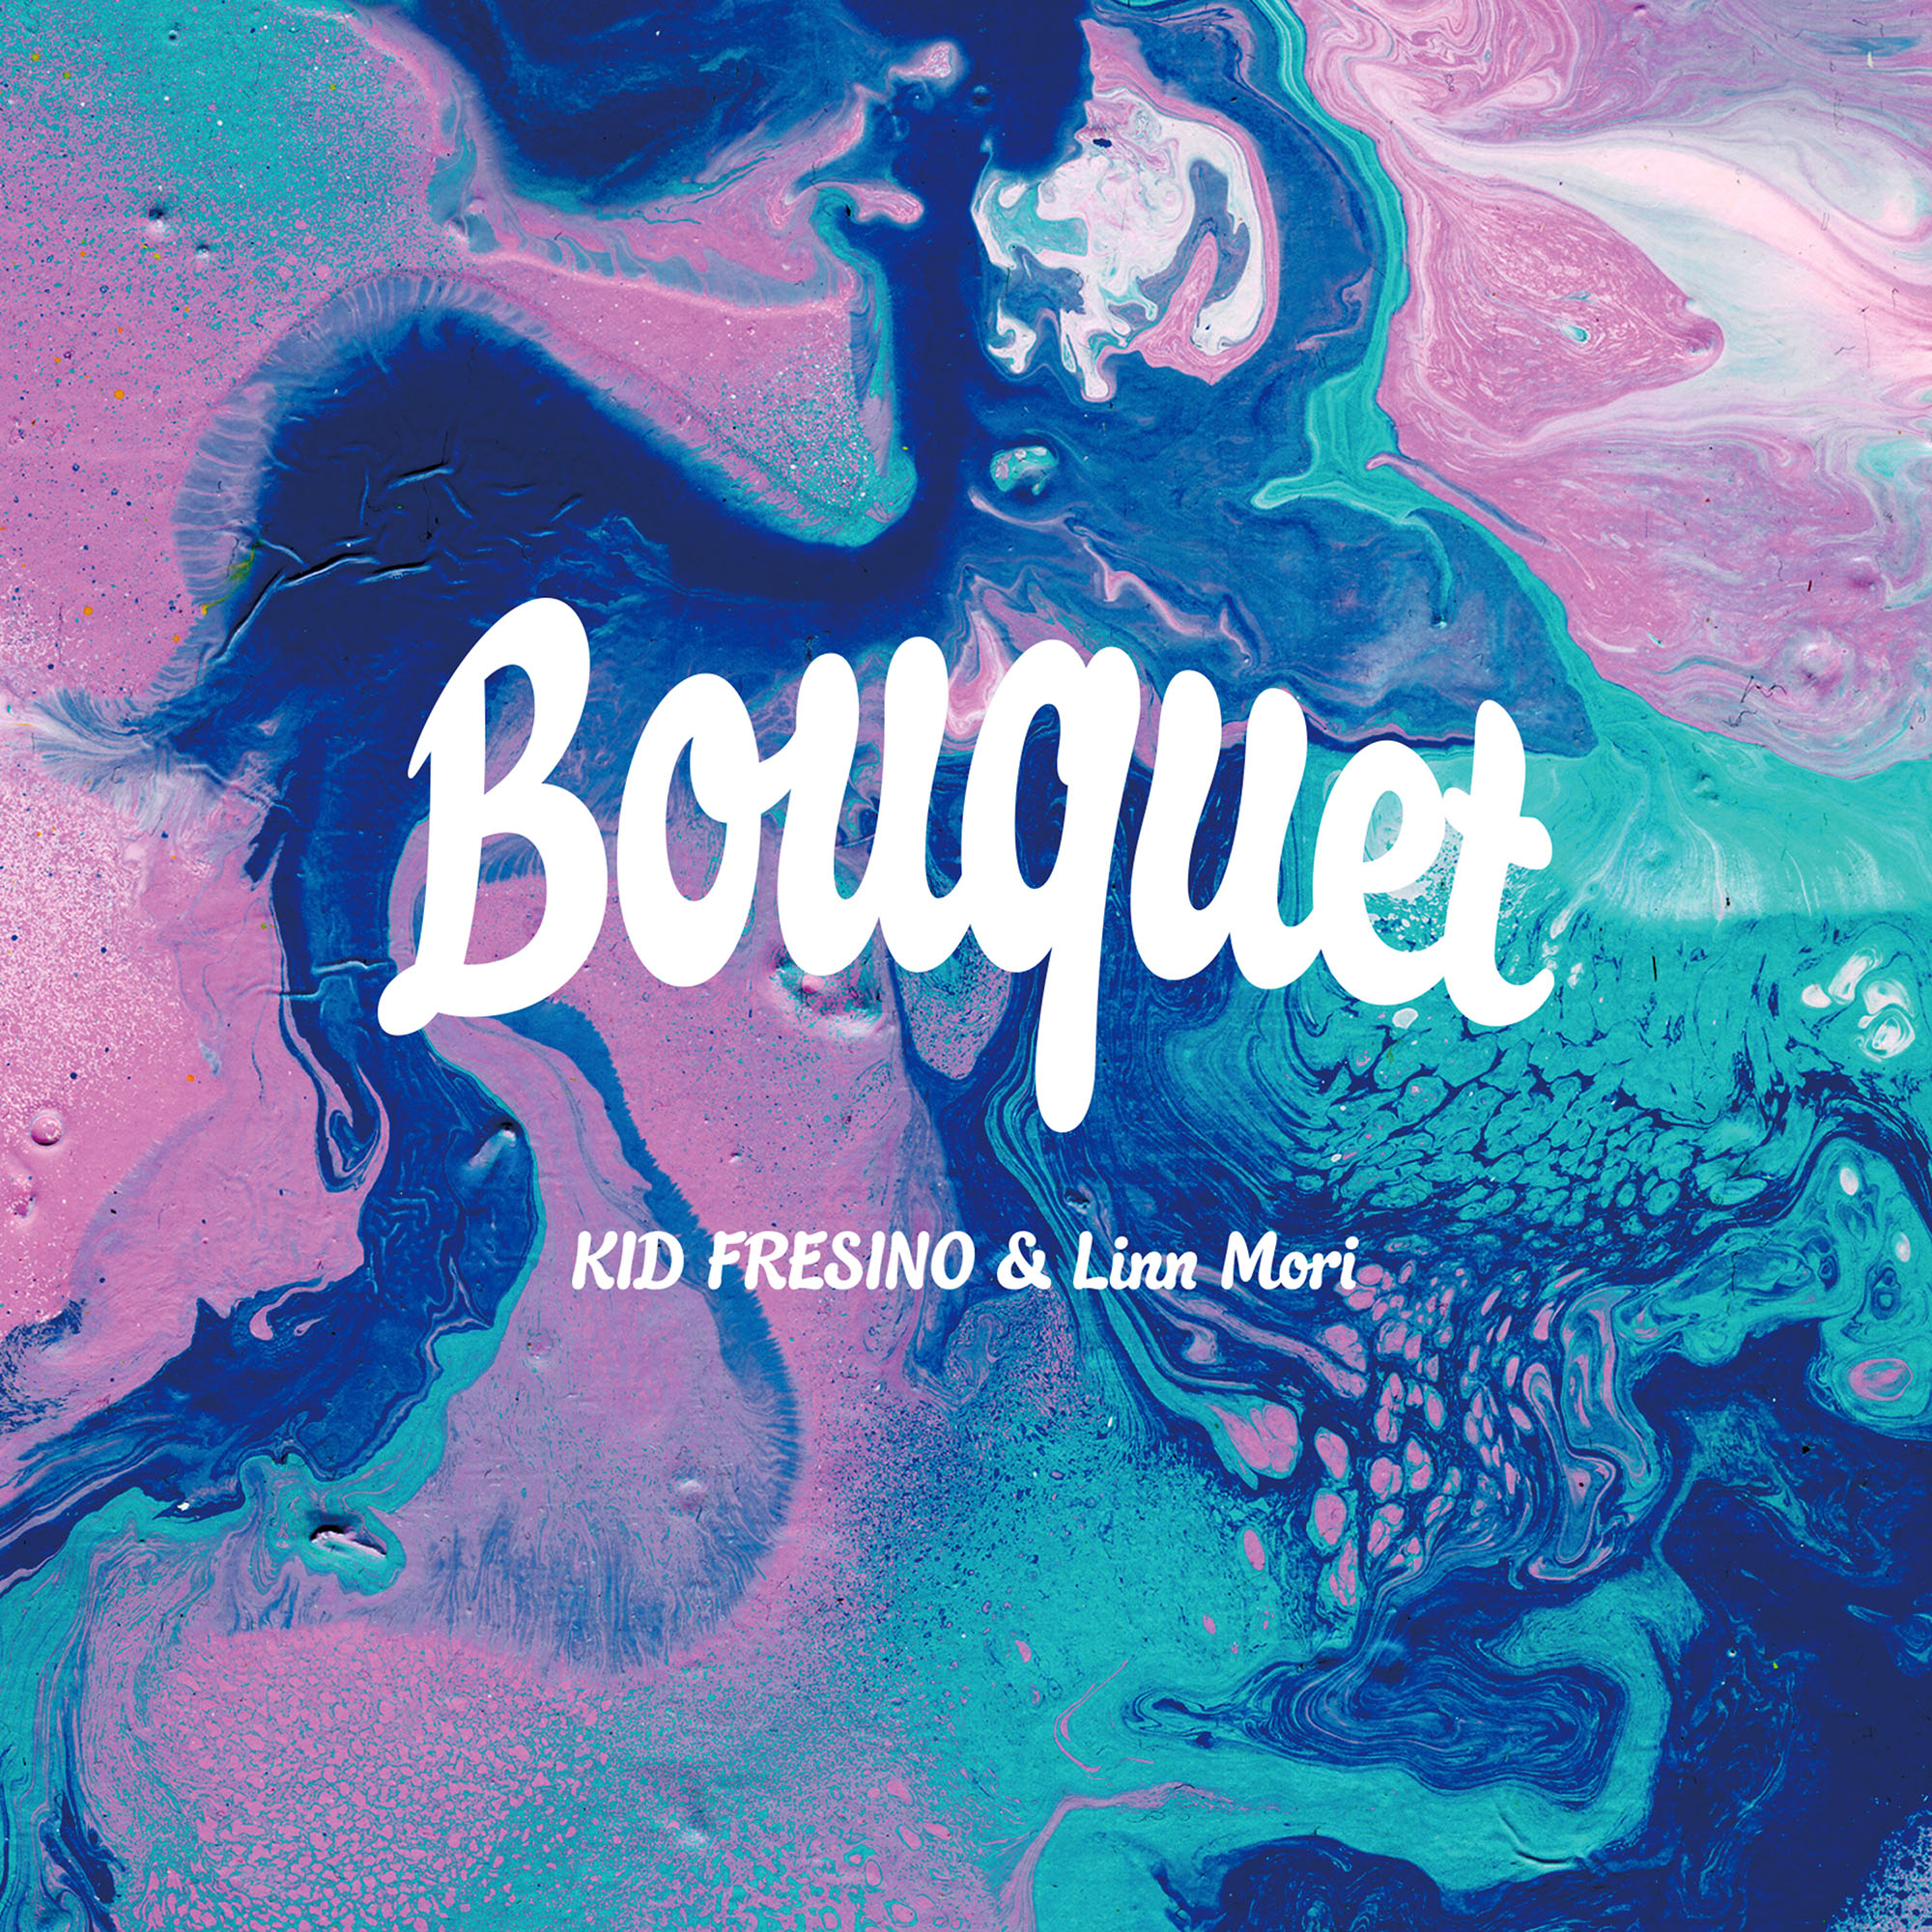 KID FRESINOとLinn Mori、幻のコラボレーション楽曲「Bouquet」を明日